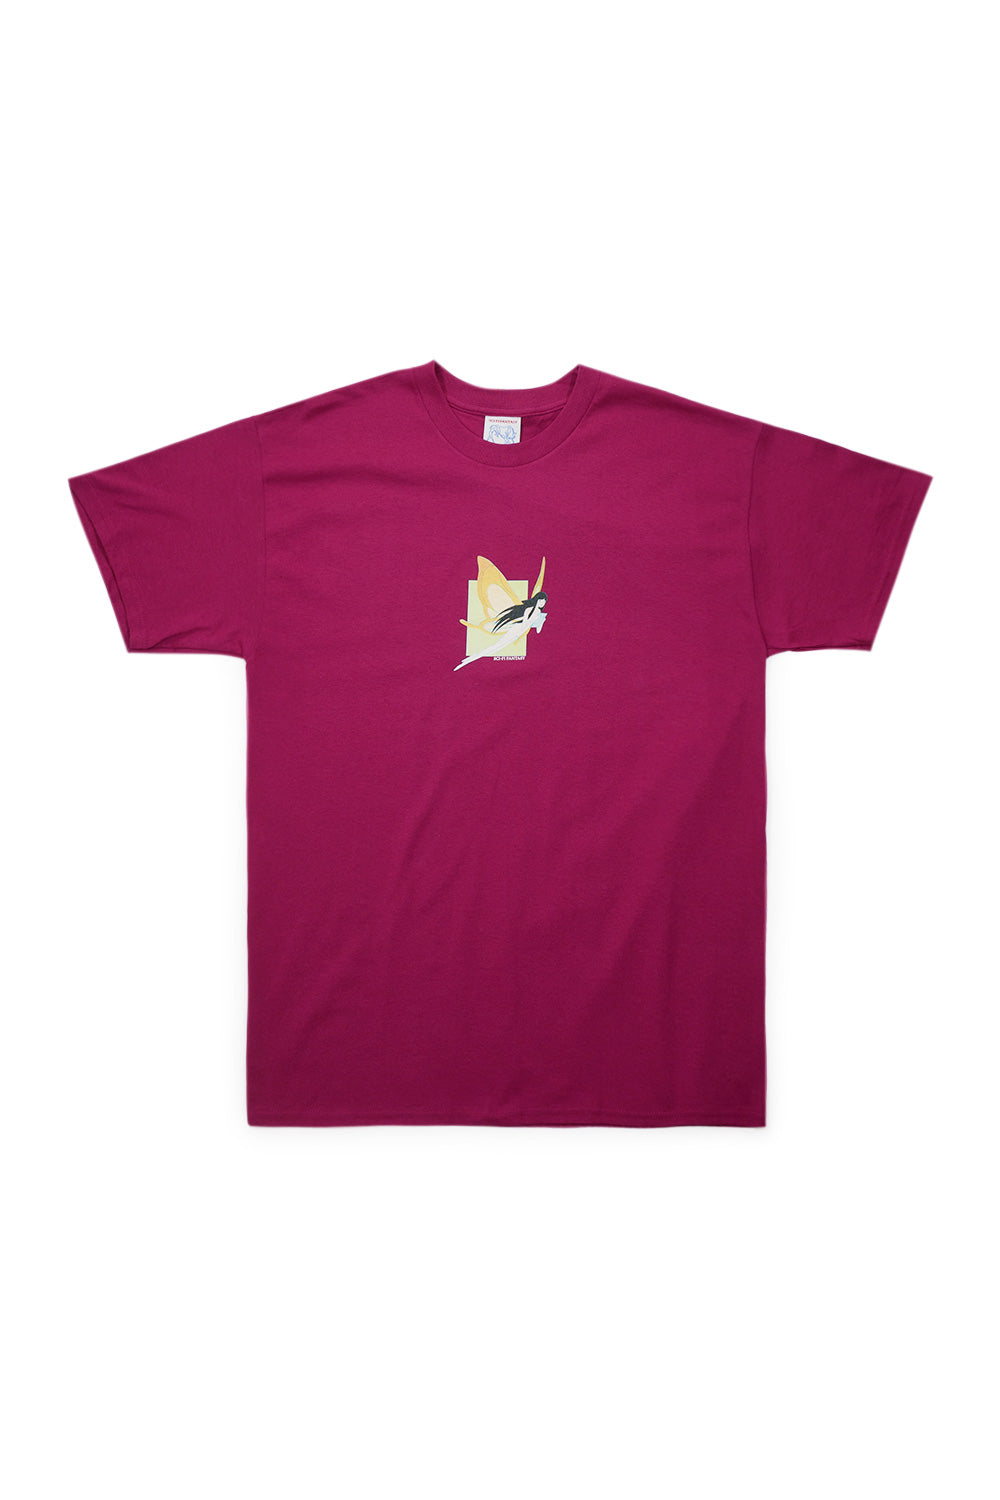 Sci-Fi Fantasy Moth Girl T-Shirt Berry - BONKERS